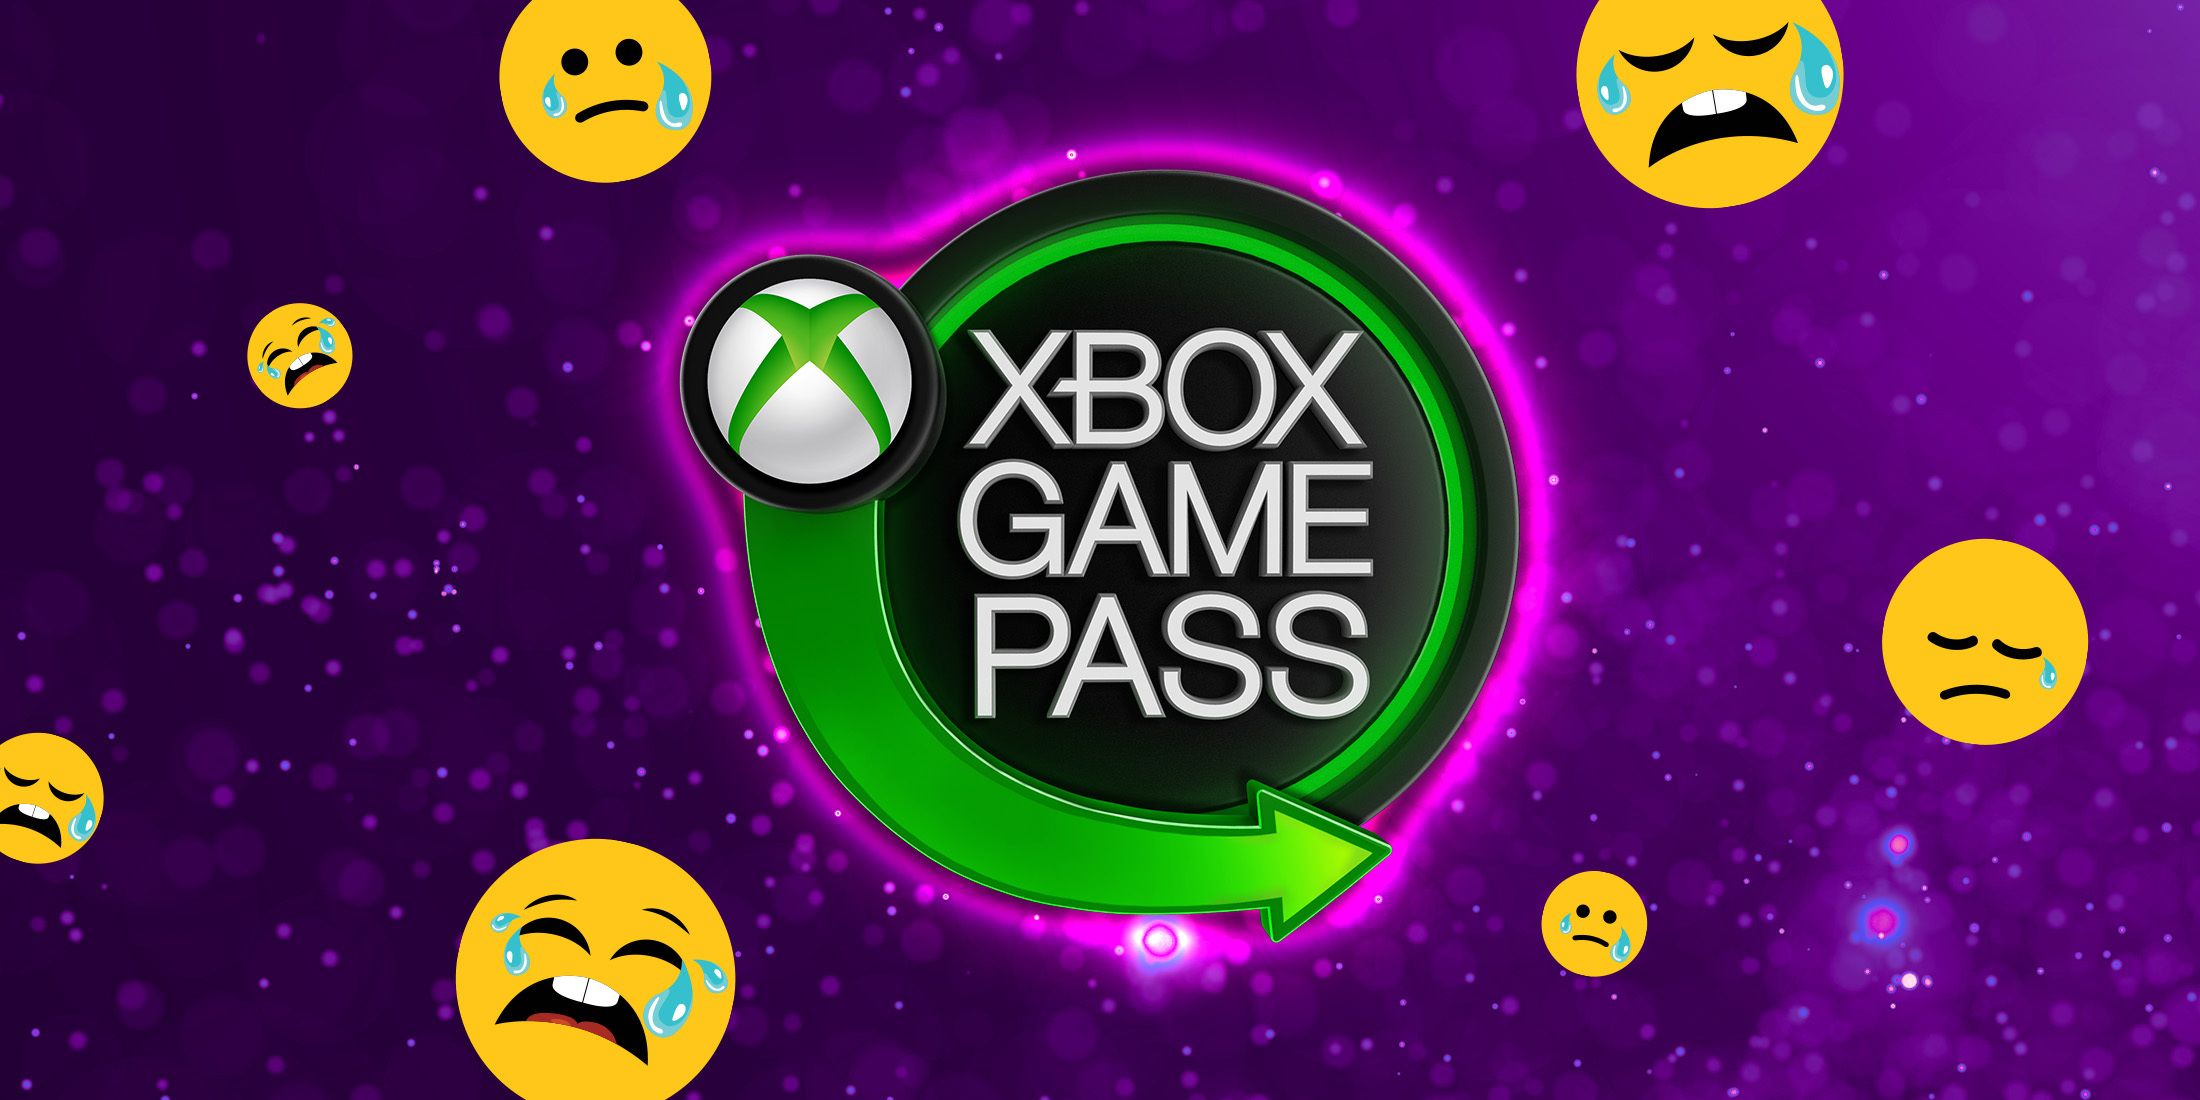 xbox game pass logo with crying emojis